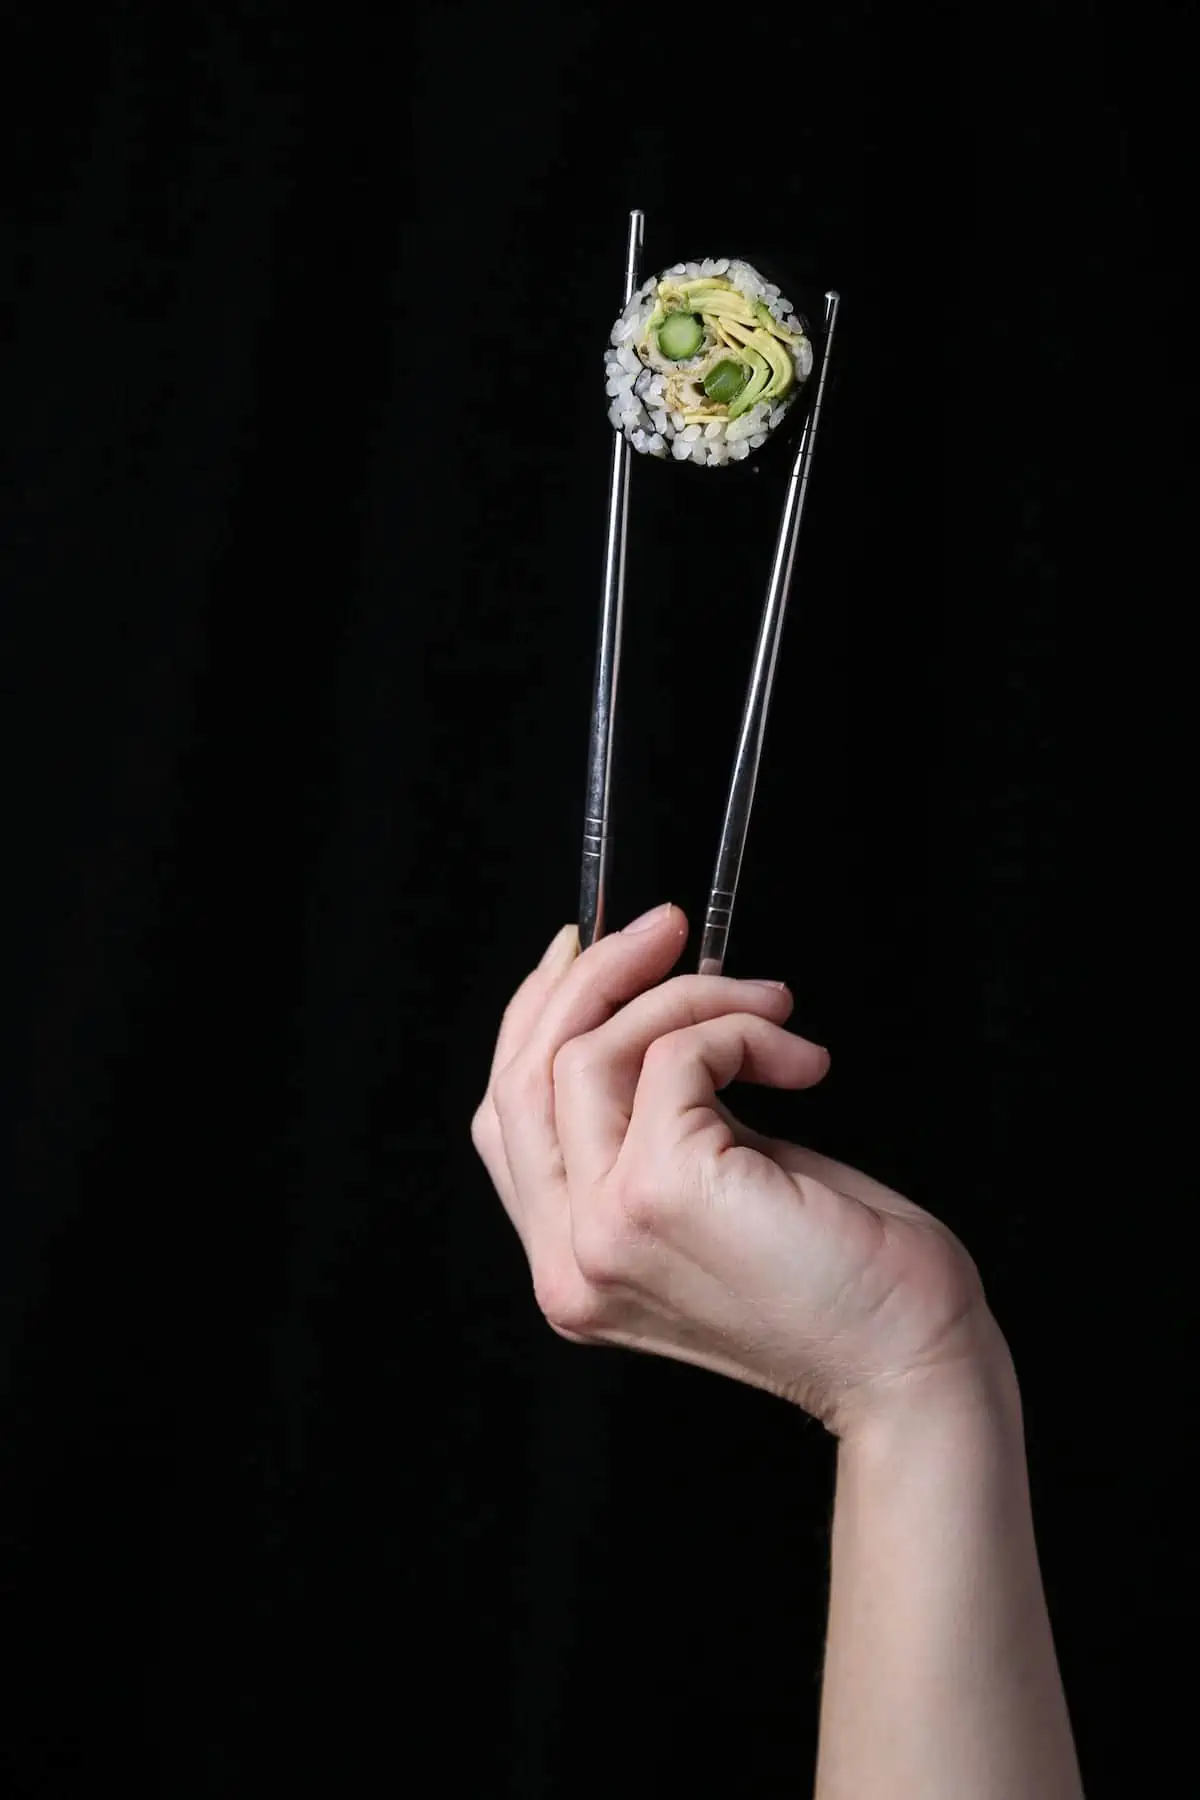 Chopsticks holding an avocado and asparagus sushi roll.